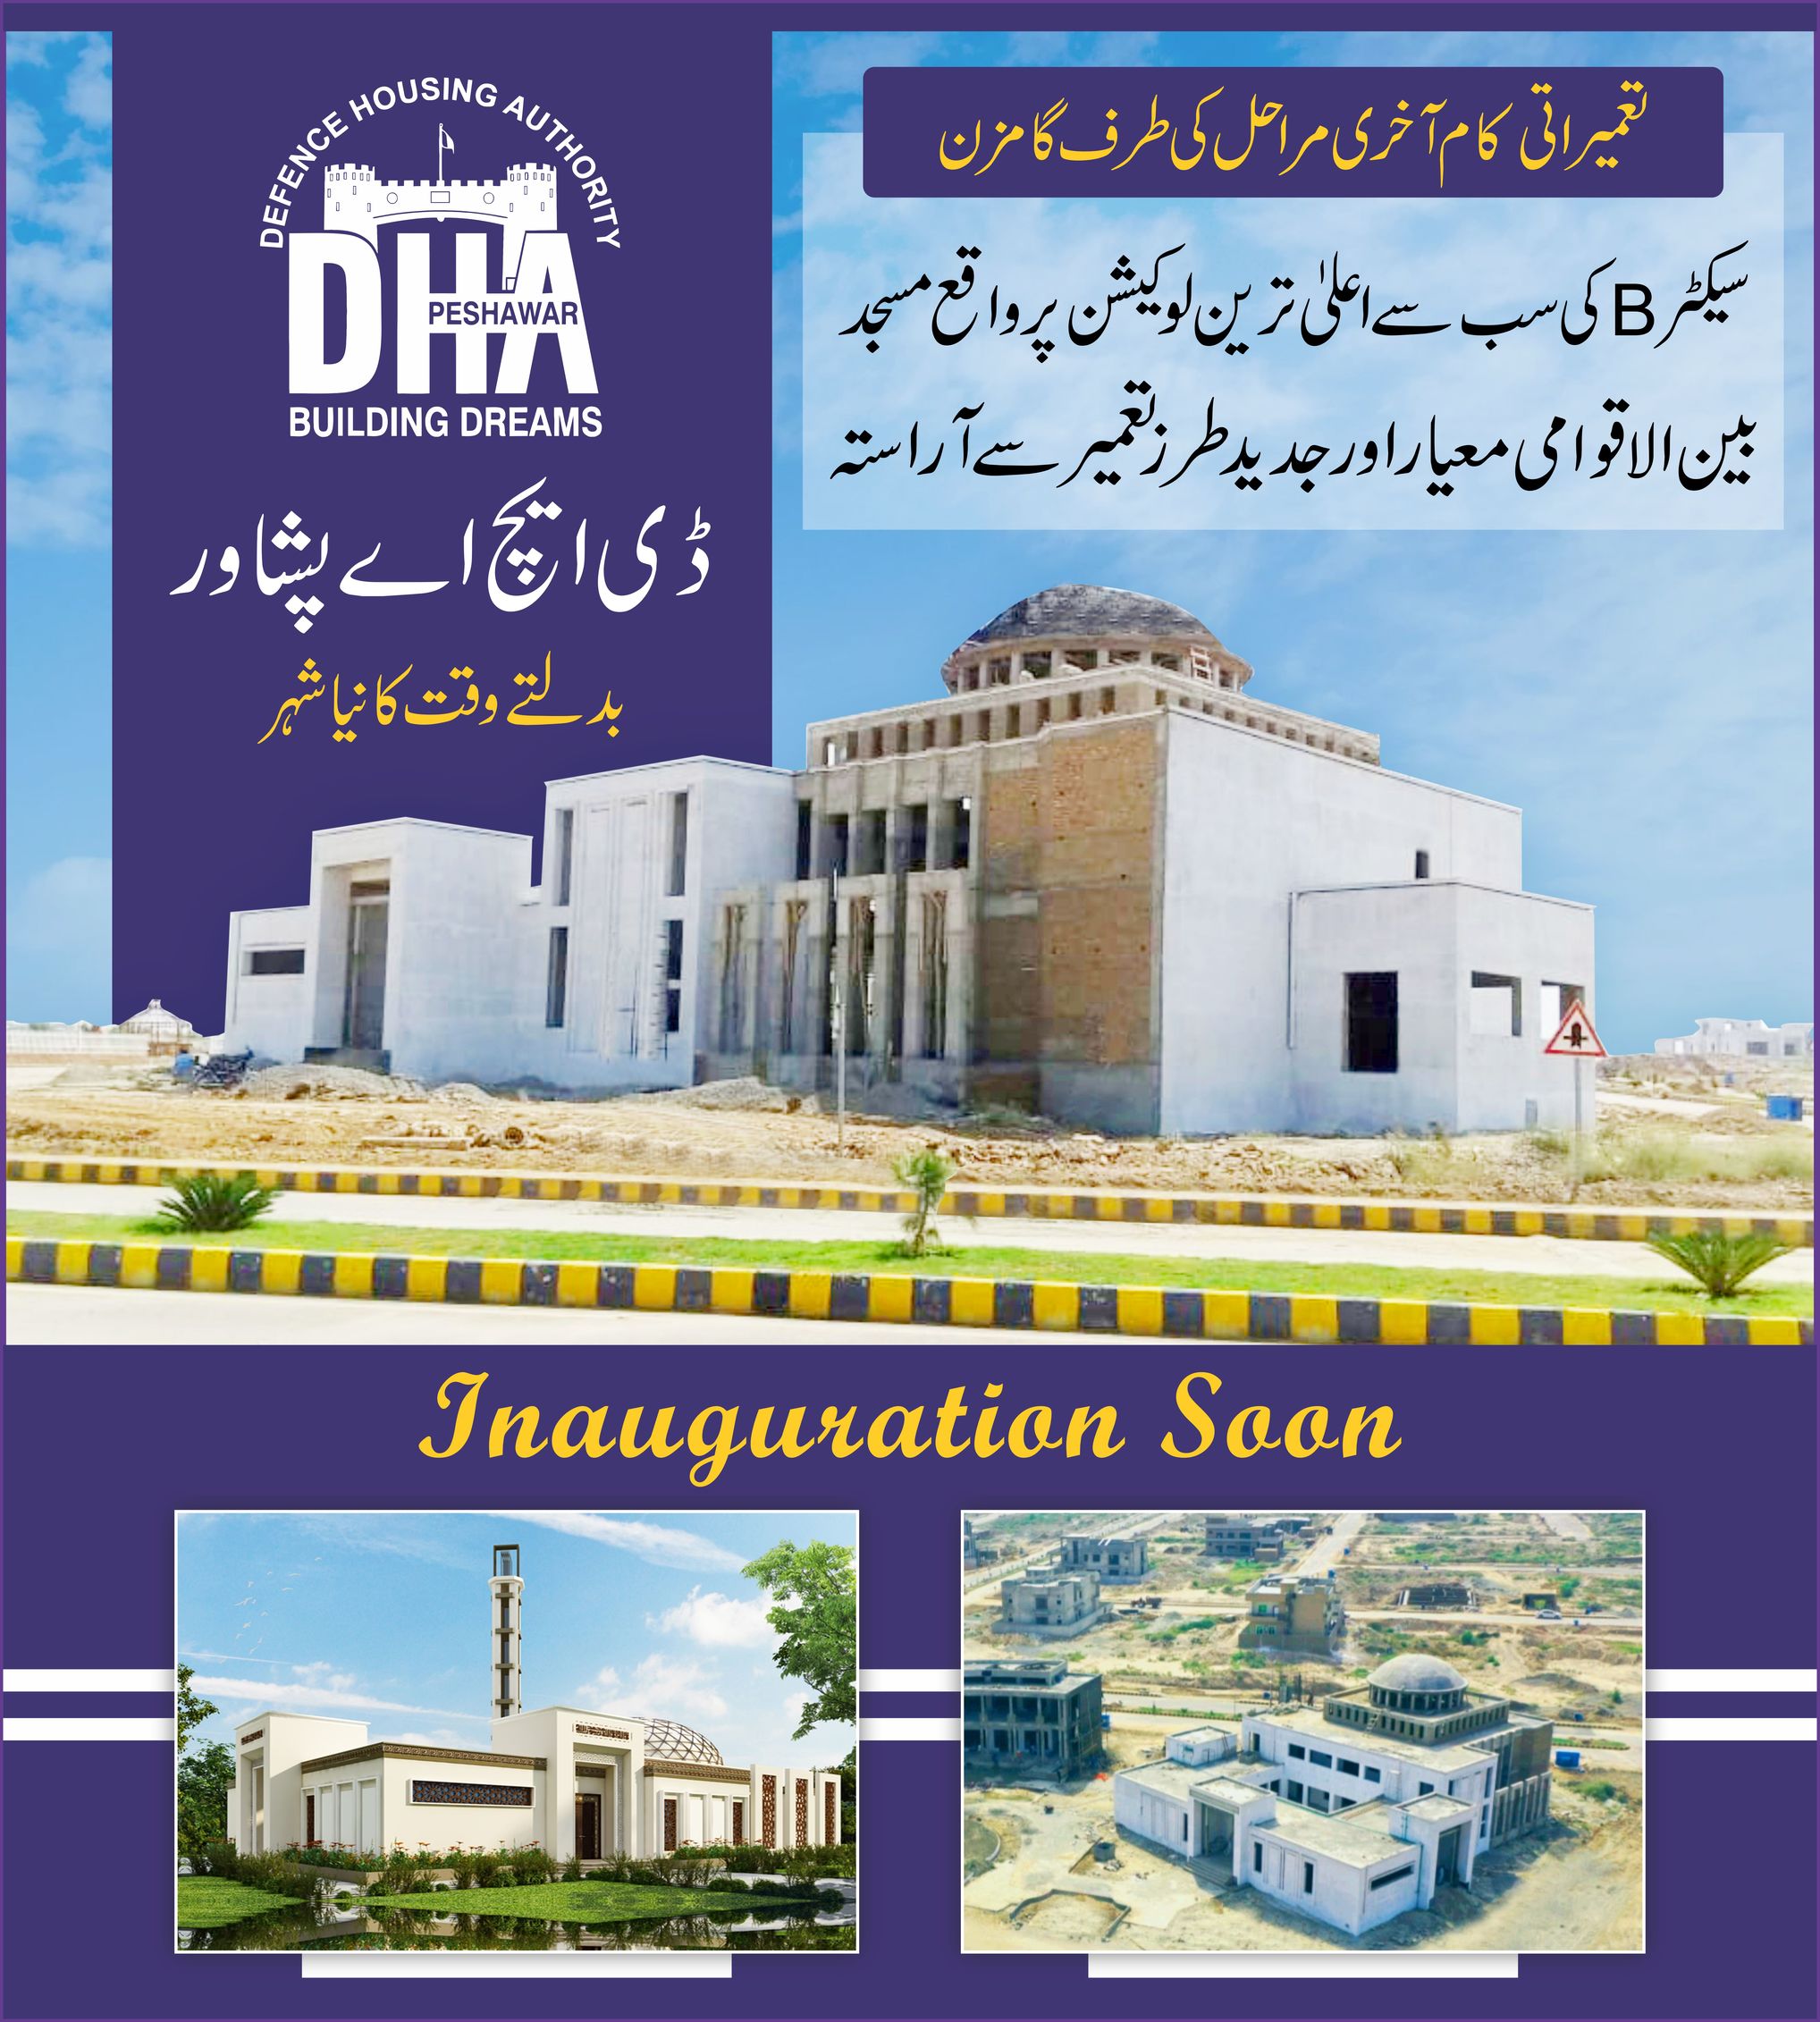 Sector_B_Masjid_Inauguration_soon_1_25.jpg